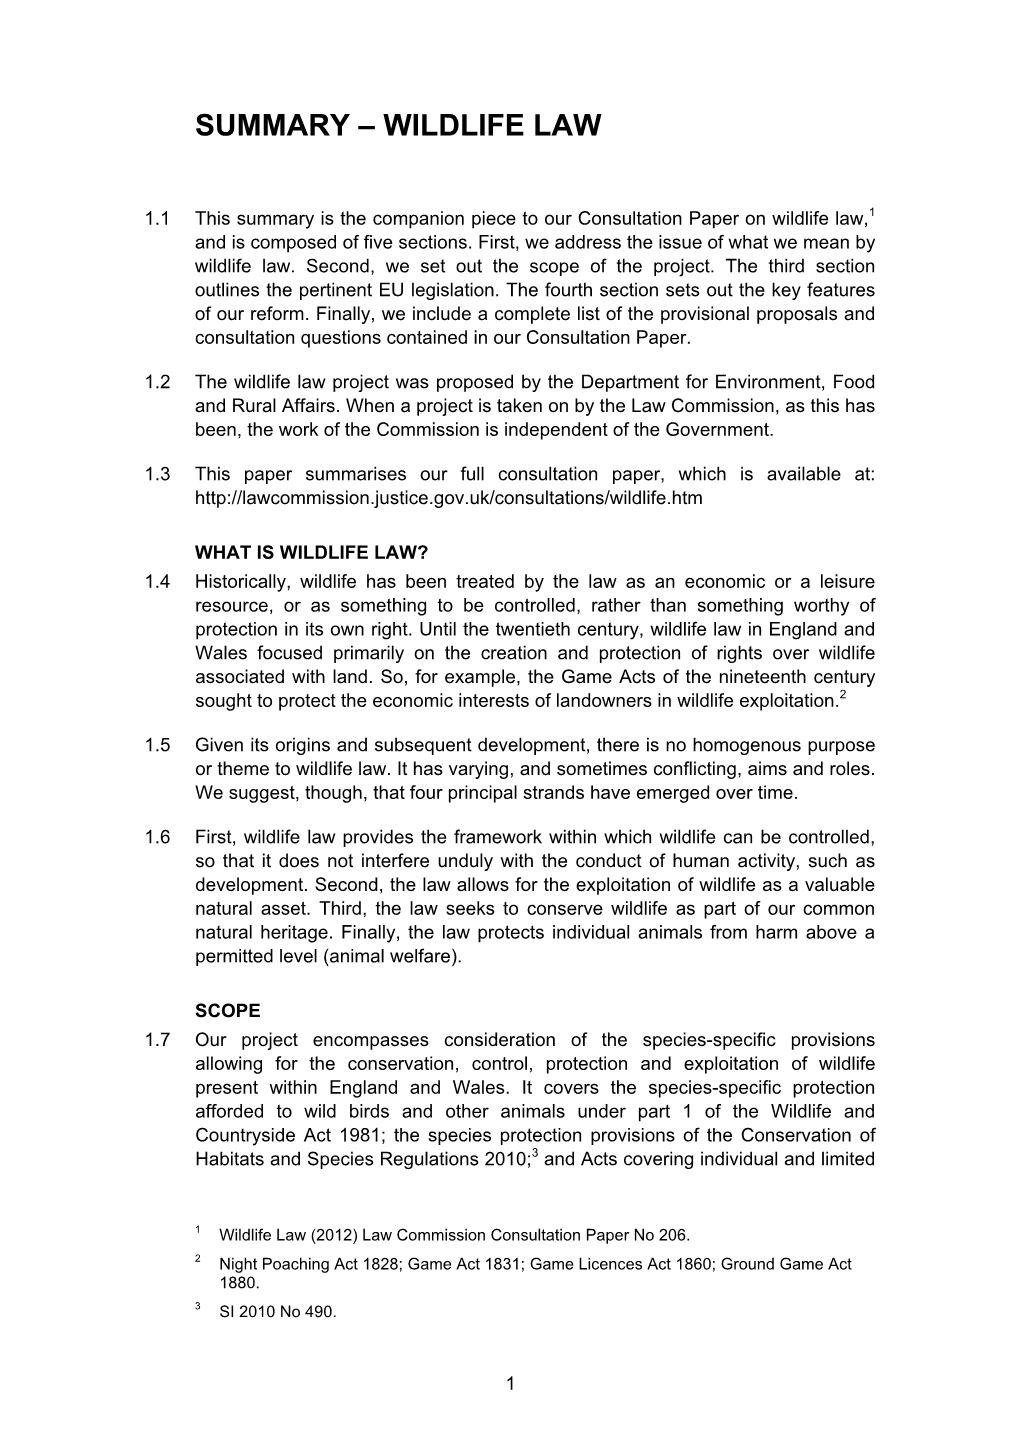 LCCP206 Wildlife Law Consultation Paper Summary